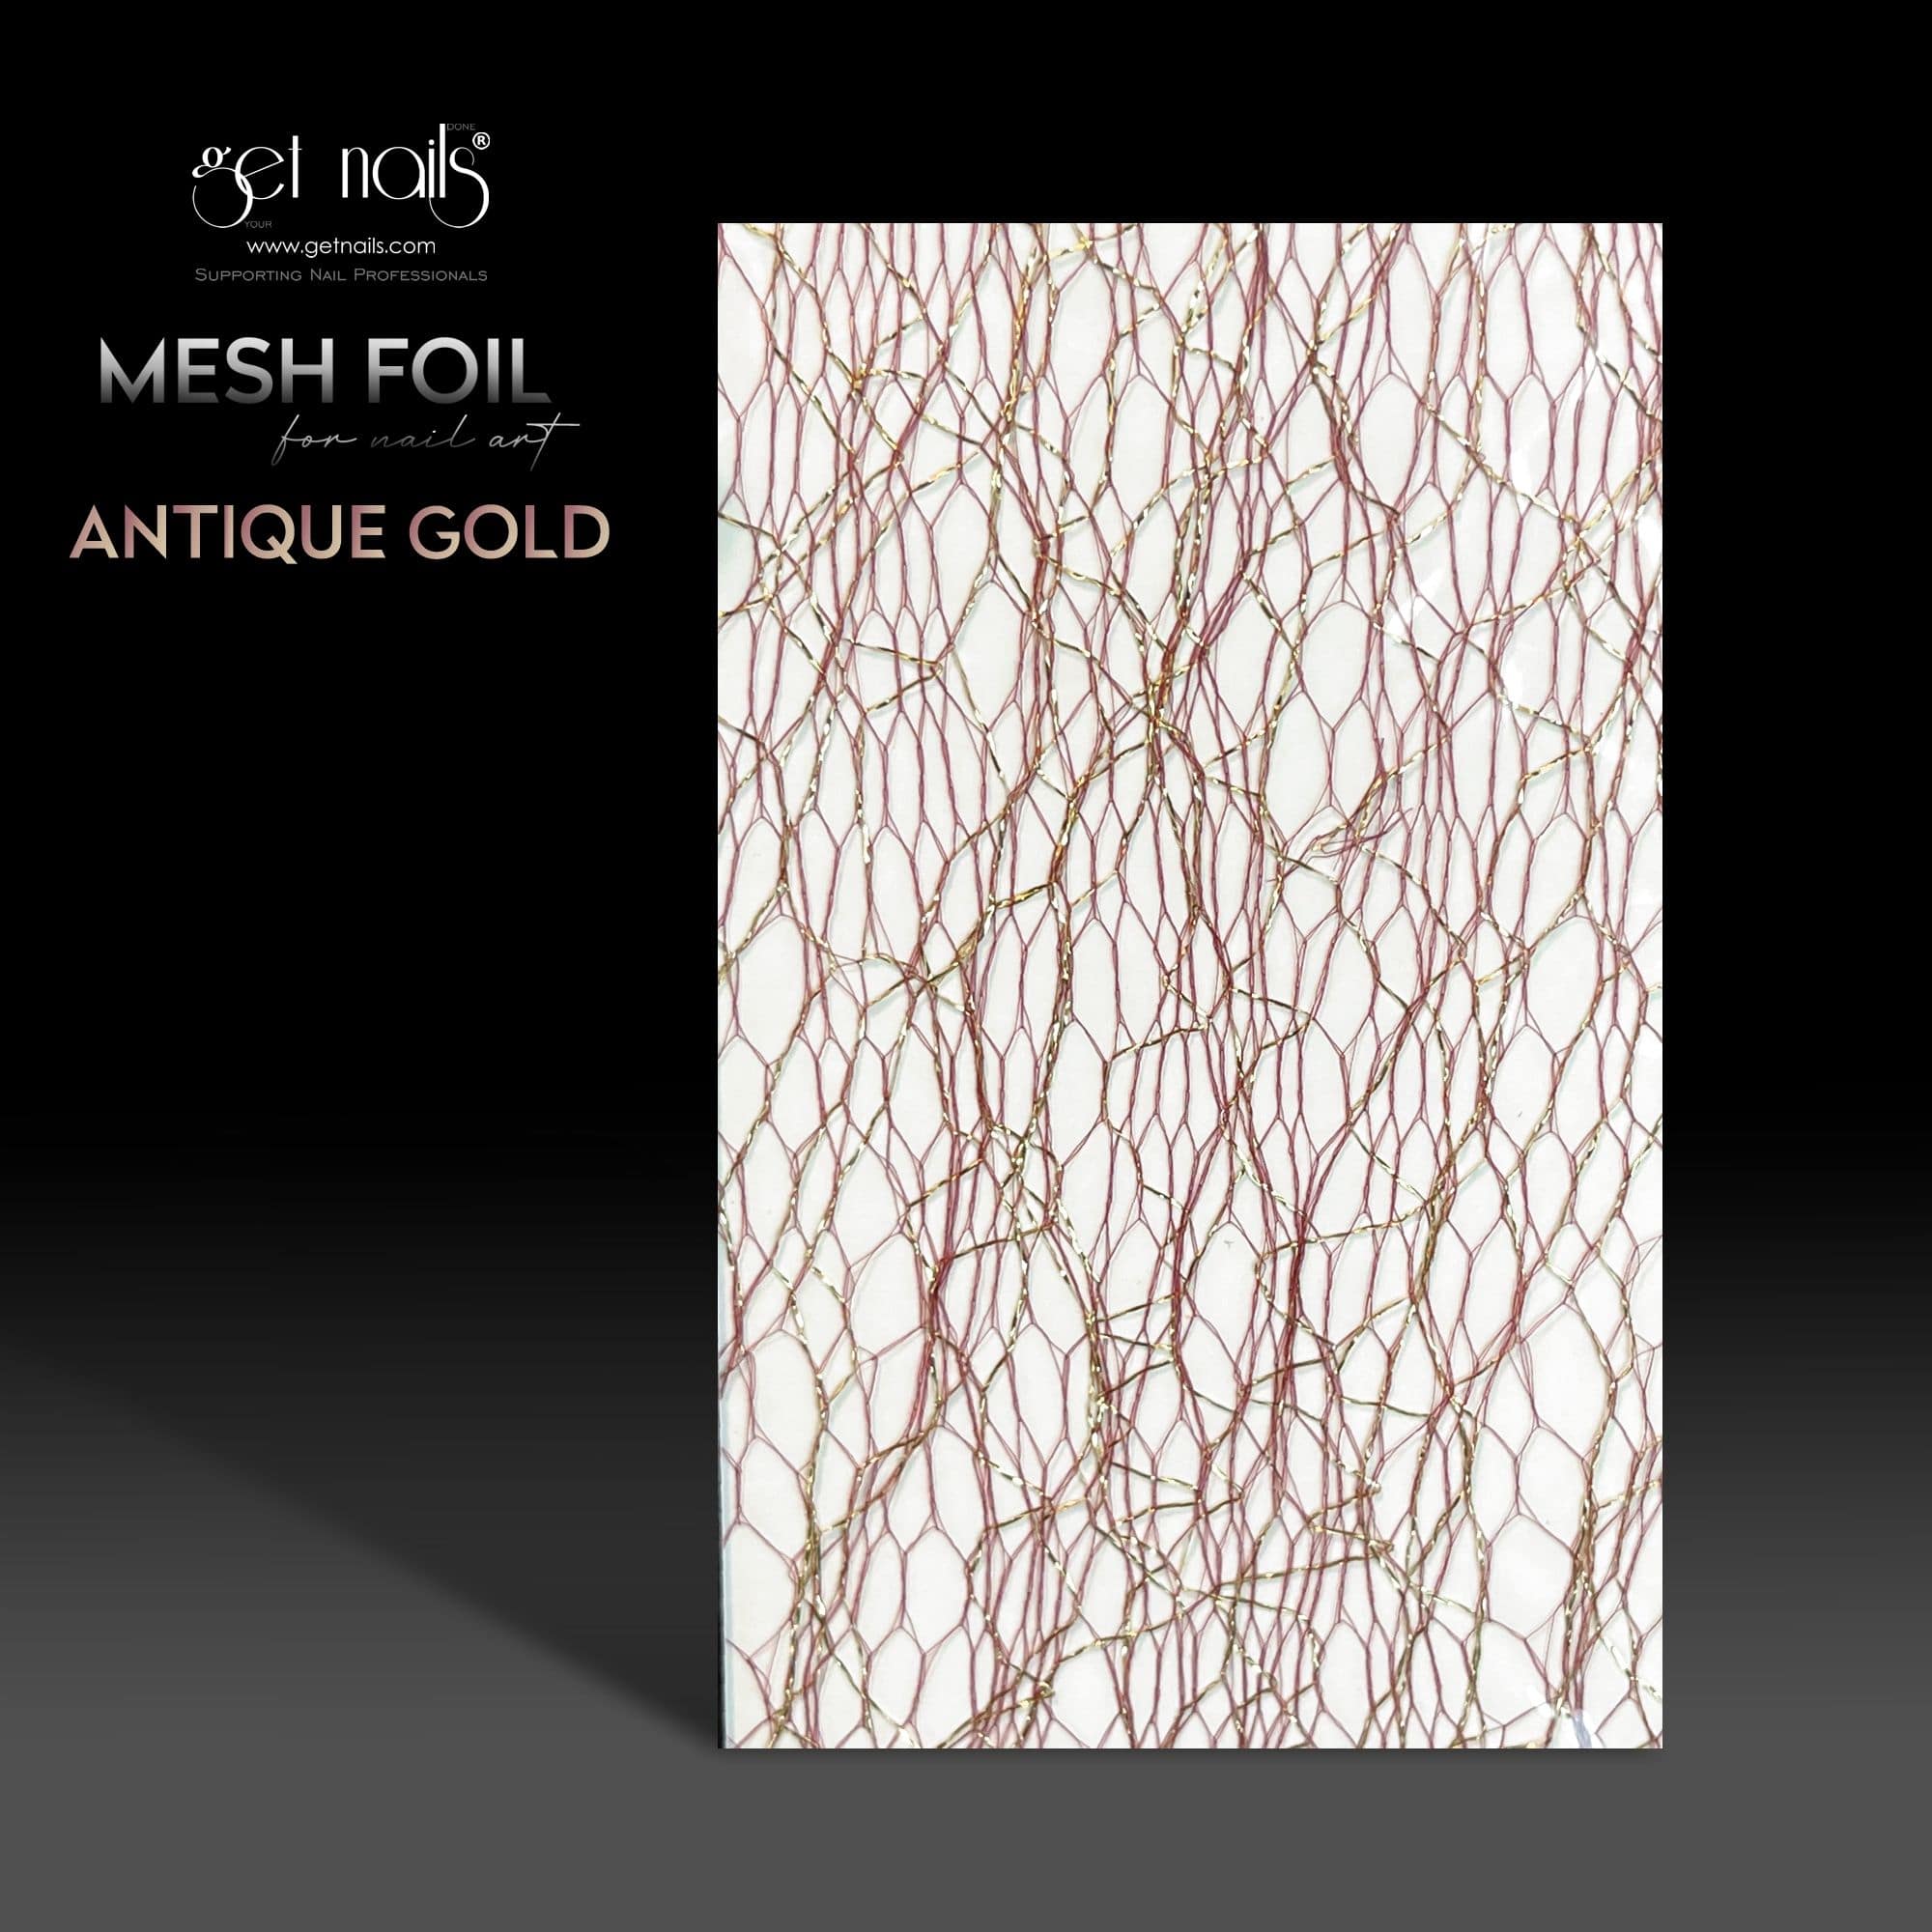 Get Nails Austria - Mesh Folie Antique Gold